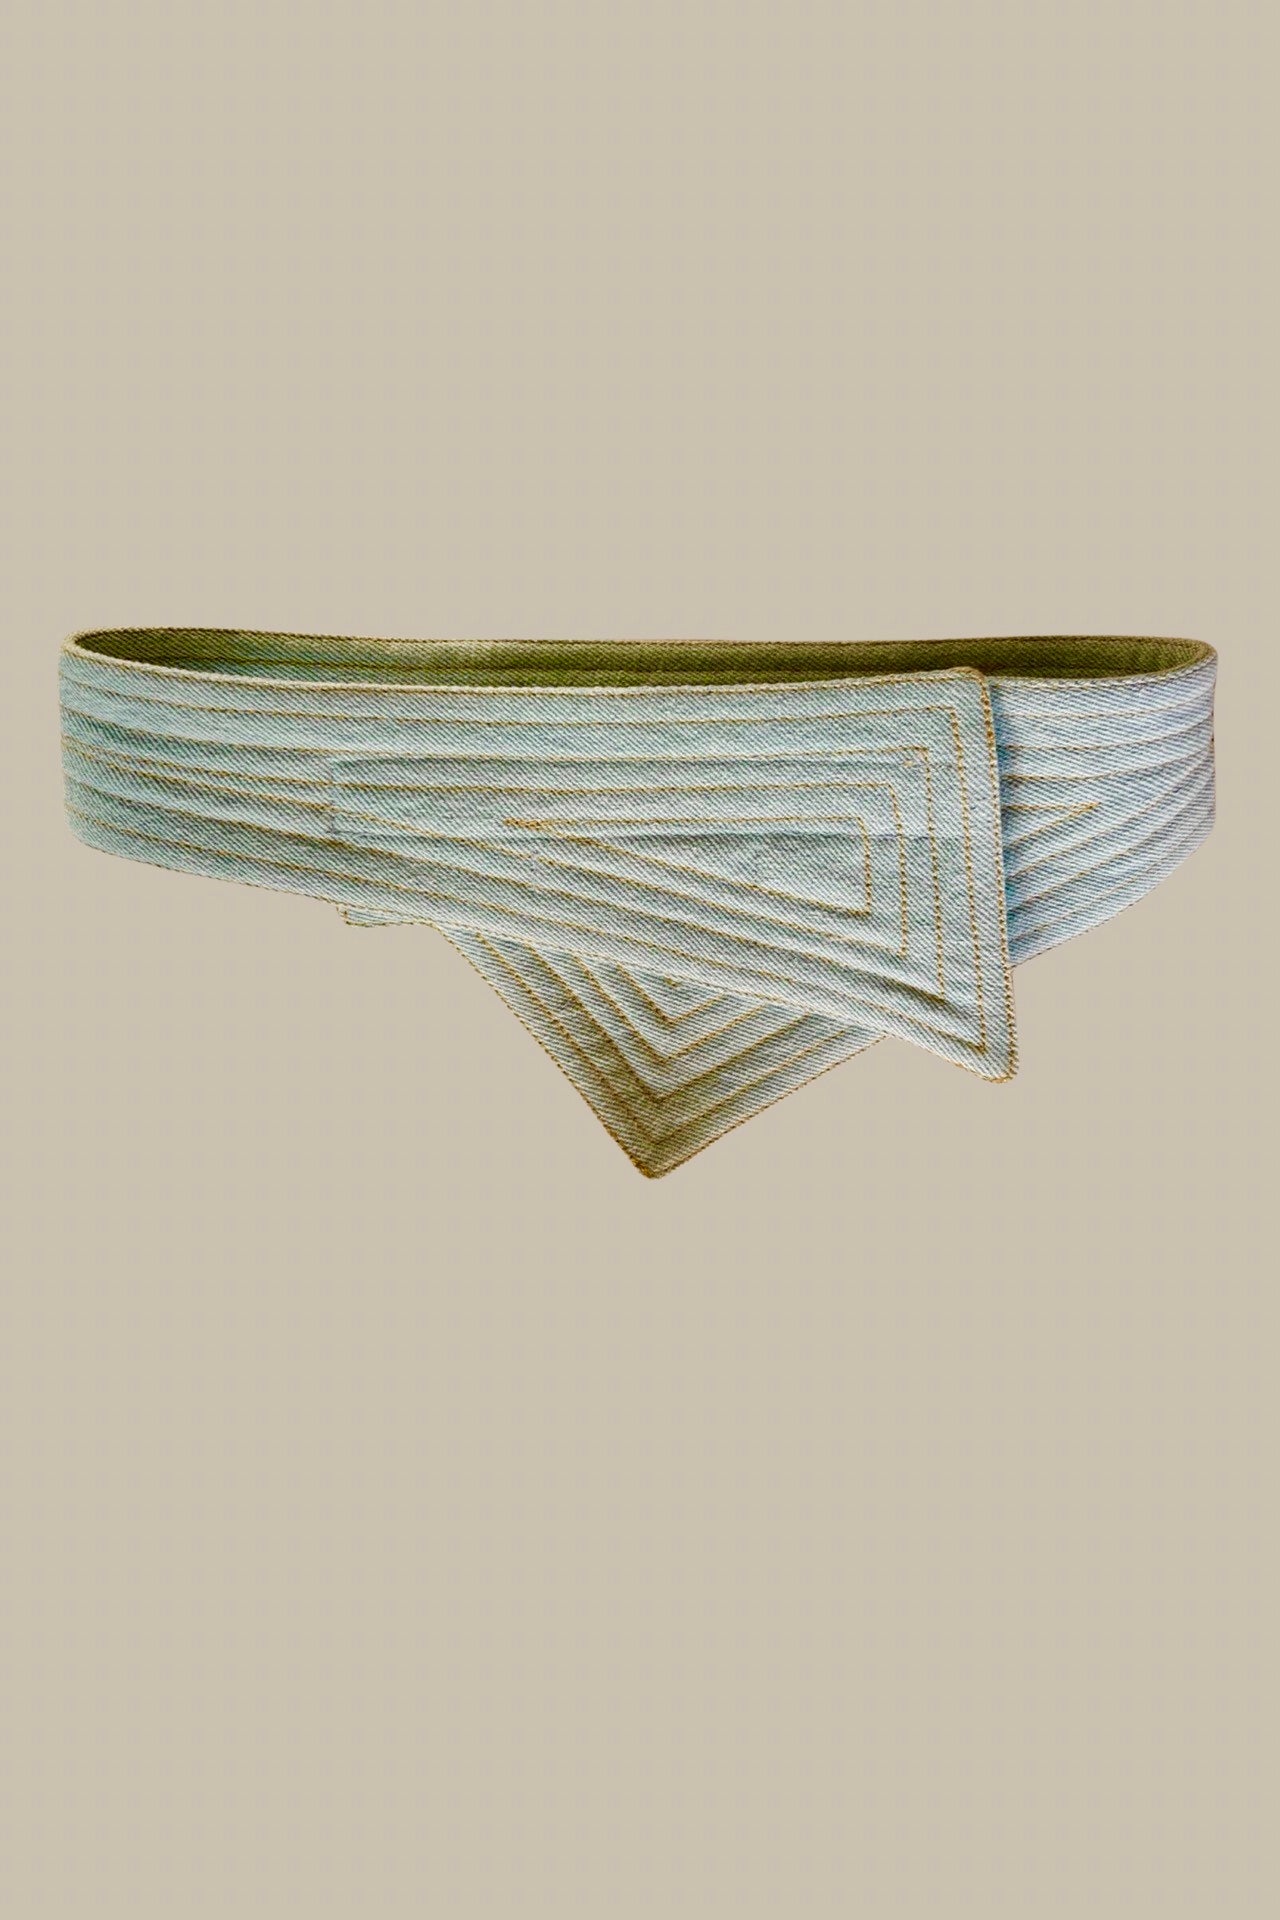 Reversible Asymmetrical Indigo Denim Belt in Oxide Blue